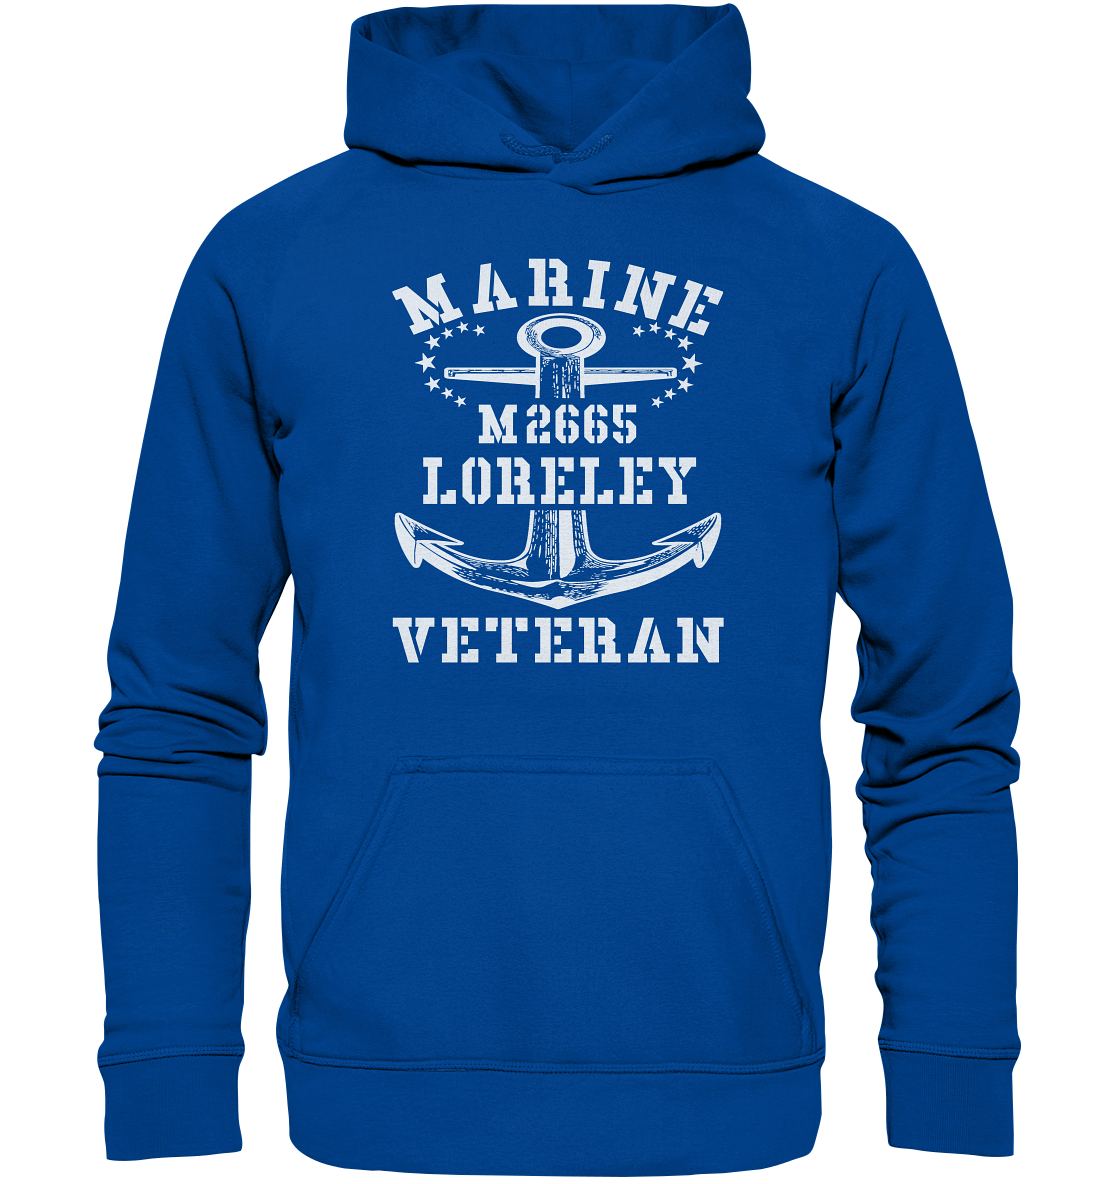 BiMi M2665 LORELEY Marine Veteran - Basic Unisex Hoodie